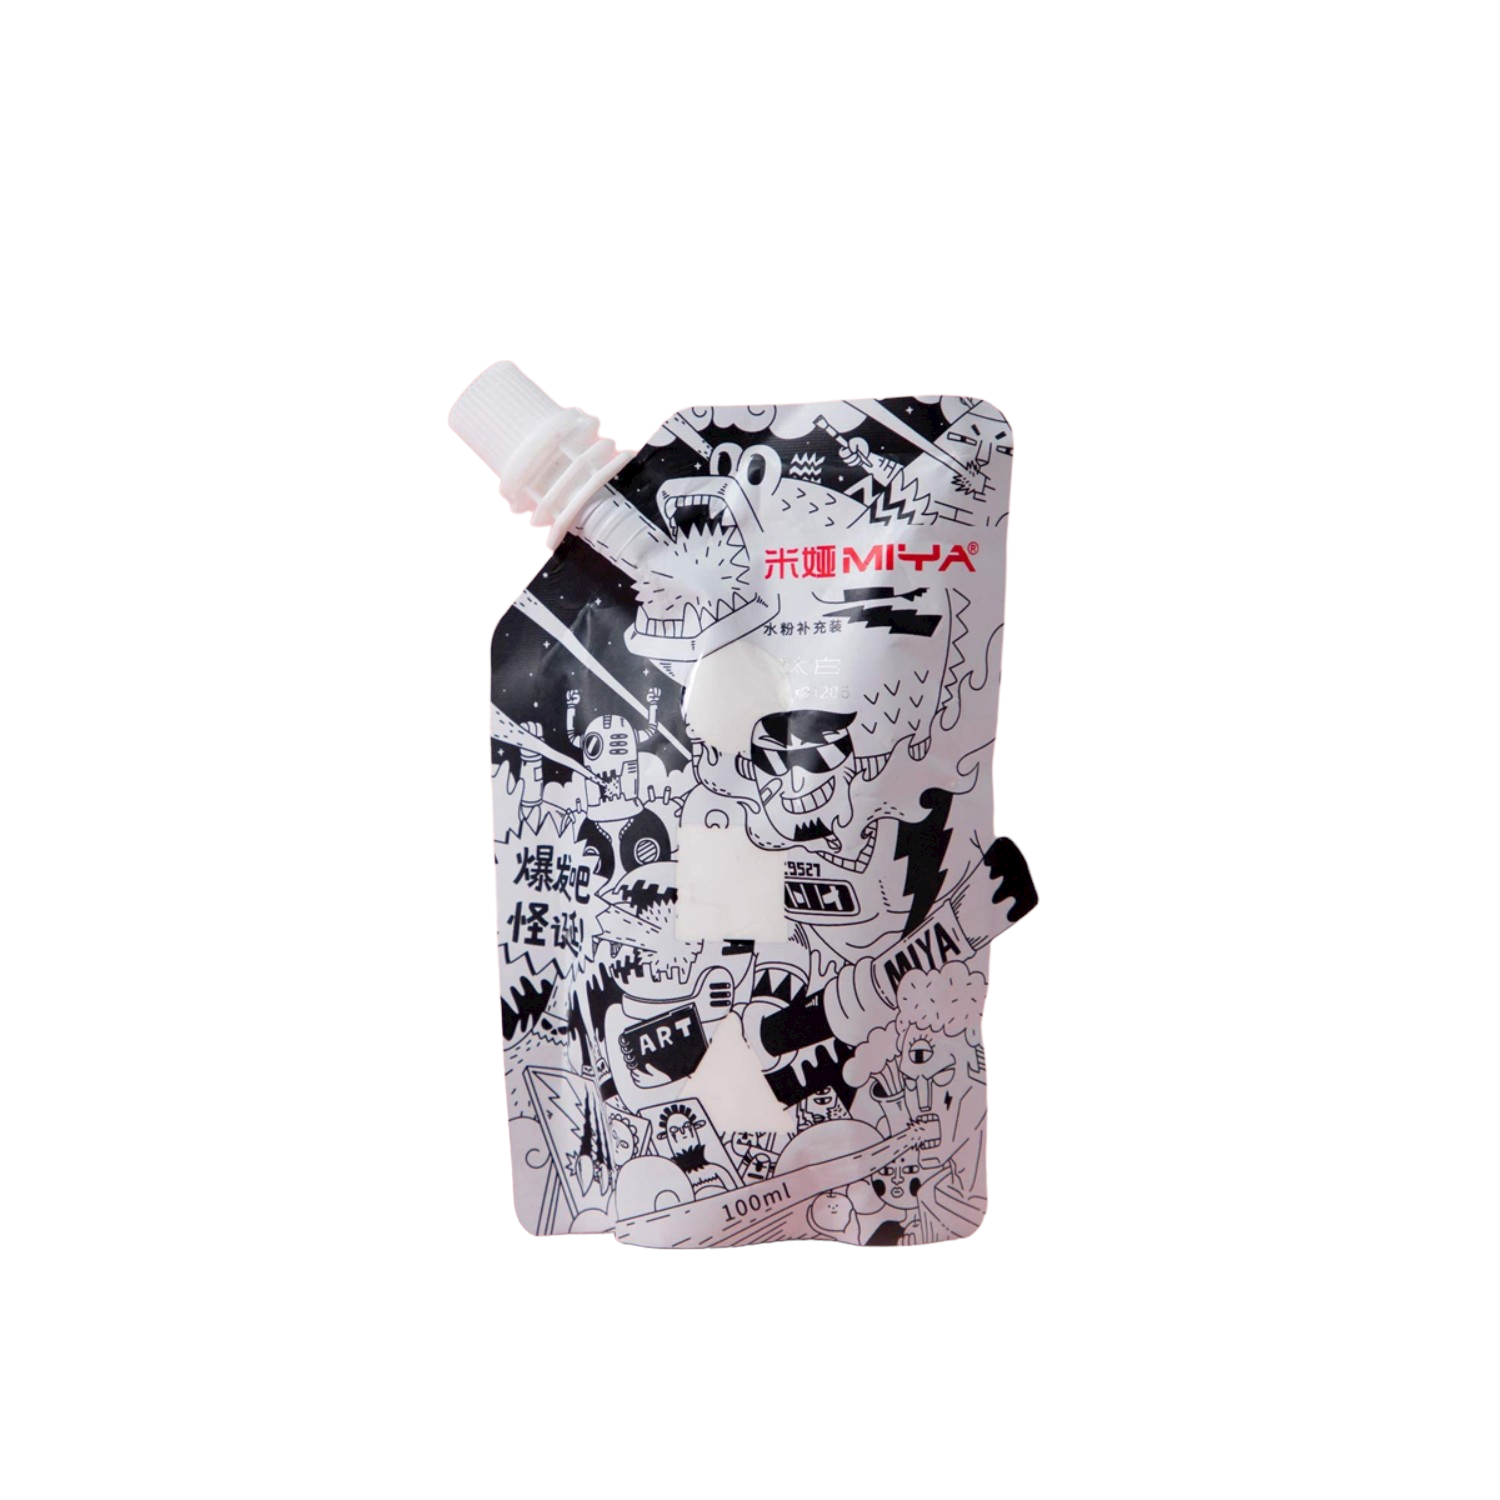 Гуашевая краска HIMI MIYA в пакете Weird 100мл Titanium White - фото 1